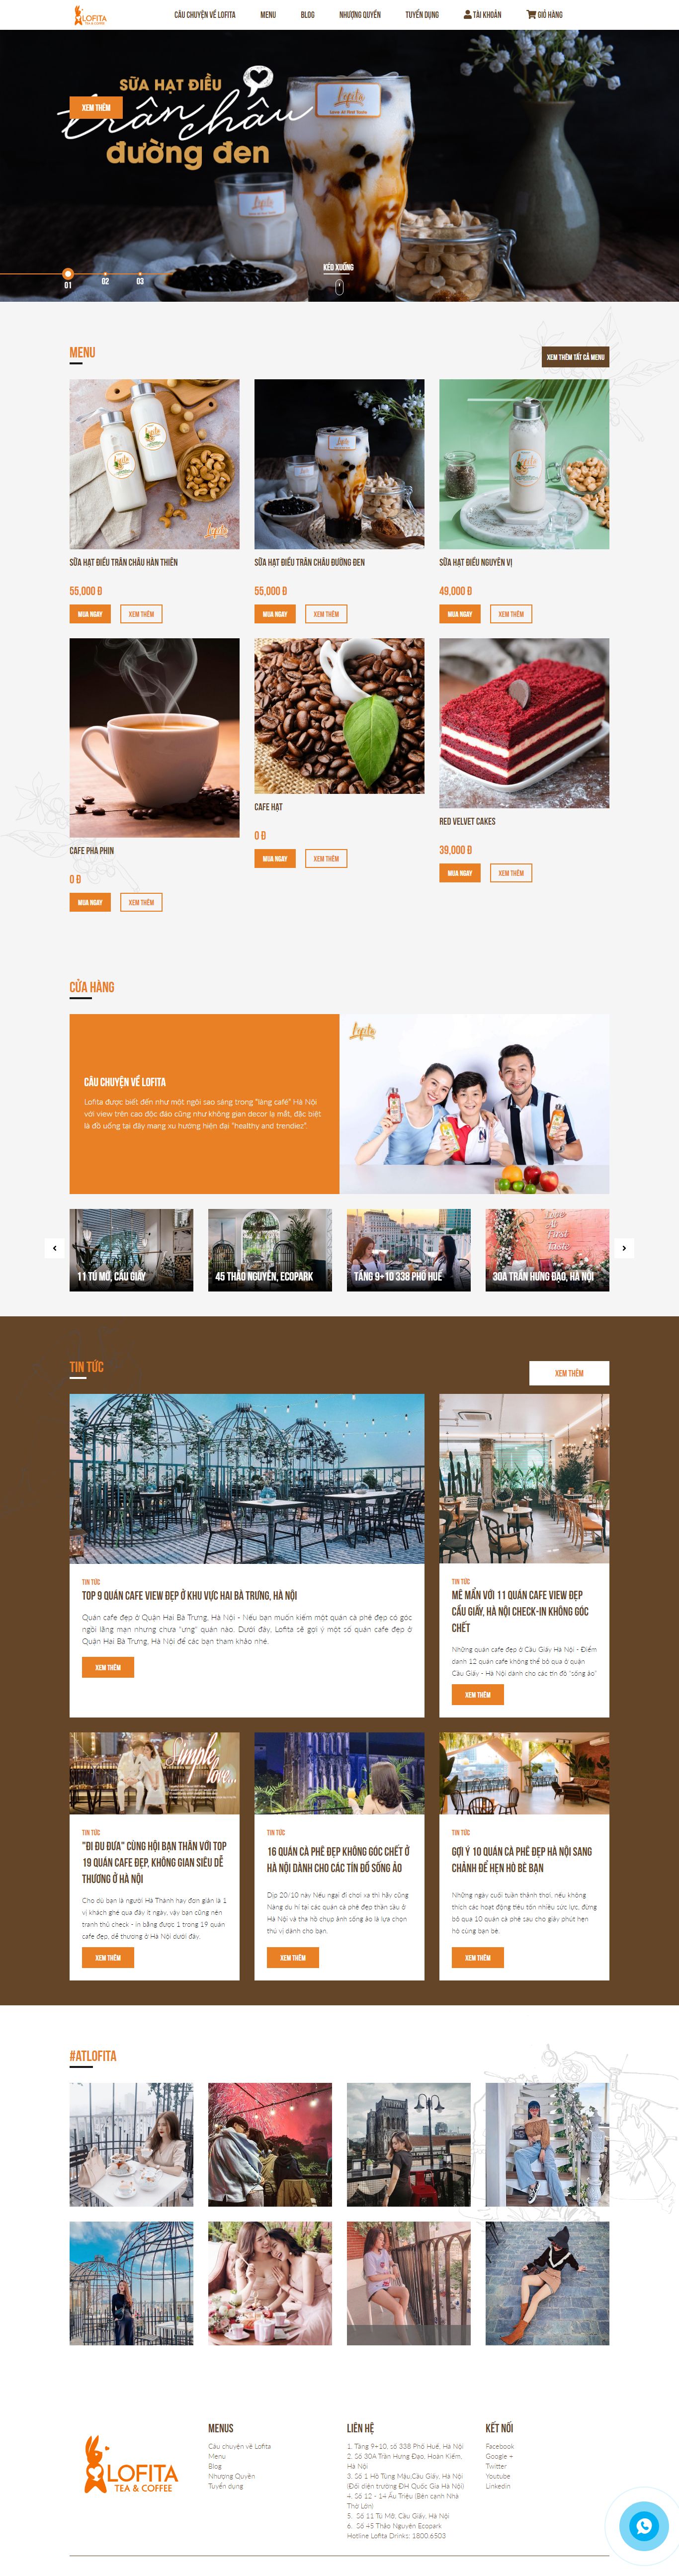 Thiết kế Website quán cafe - lofita.vn